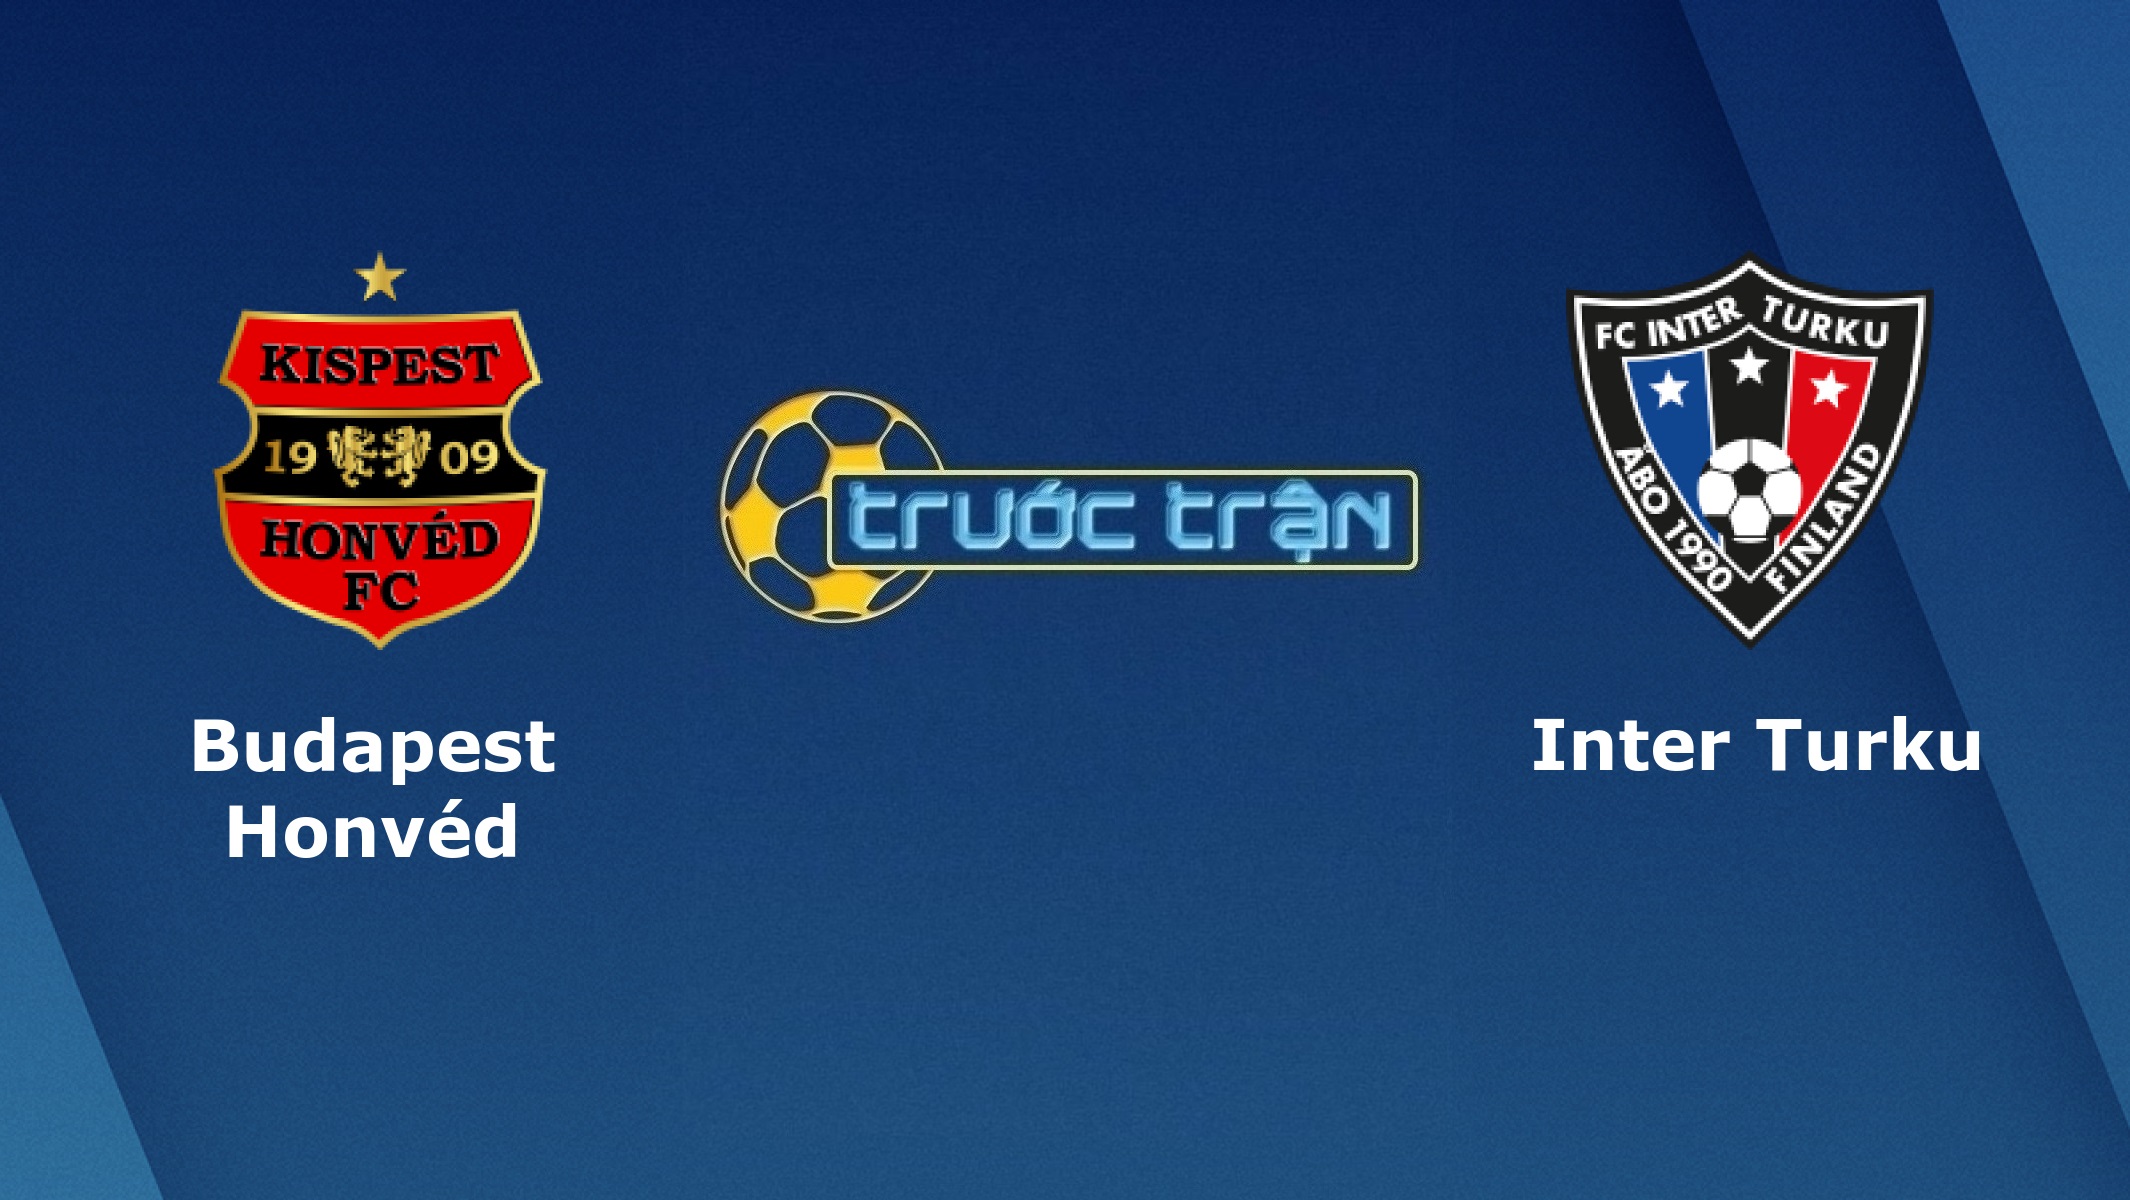 Budapest Honved vs Inter Turku – Tip kèo bóng đá hôm nay – 28/08